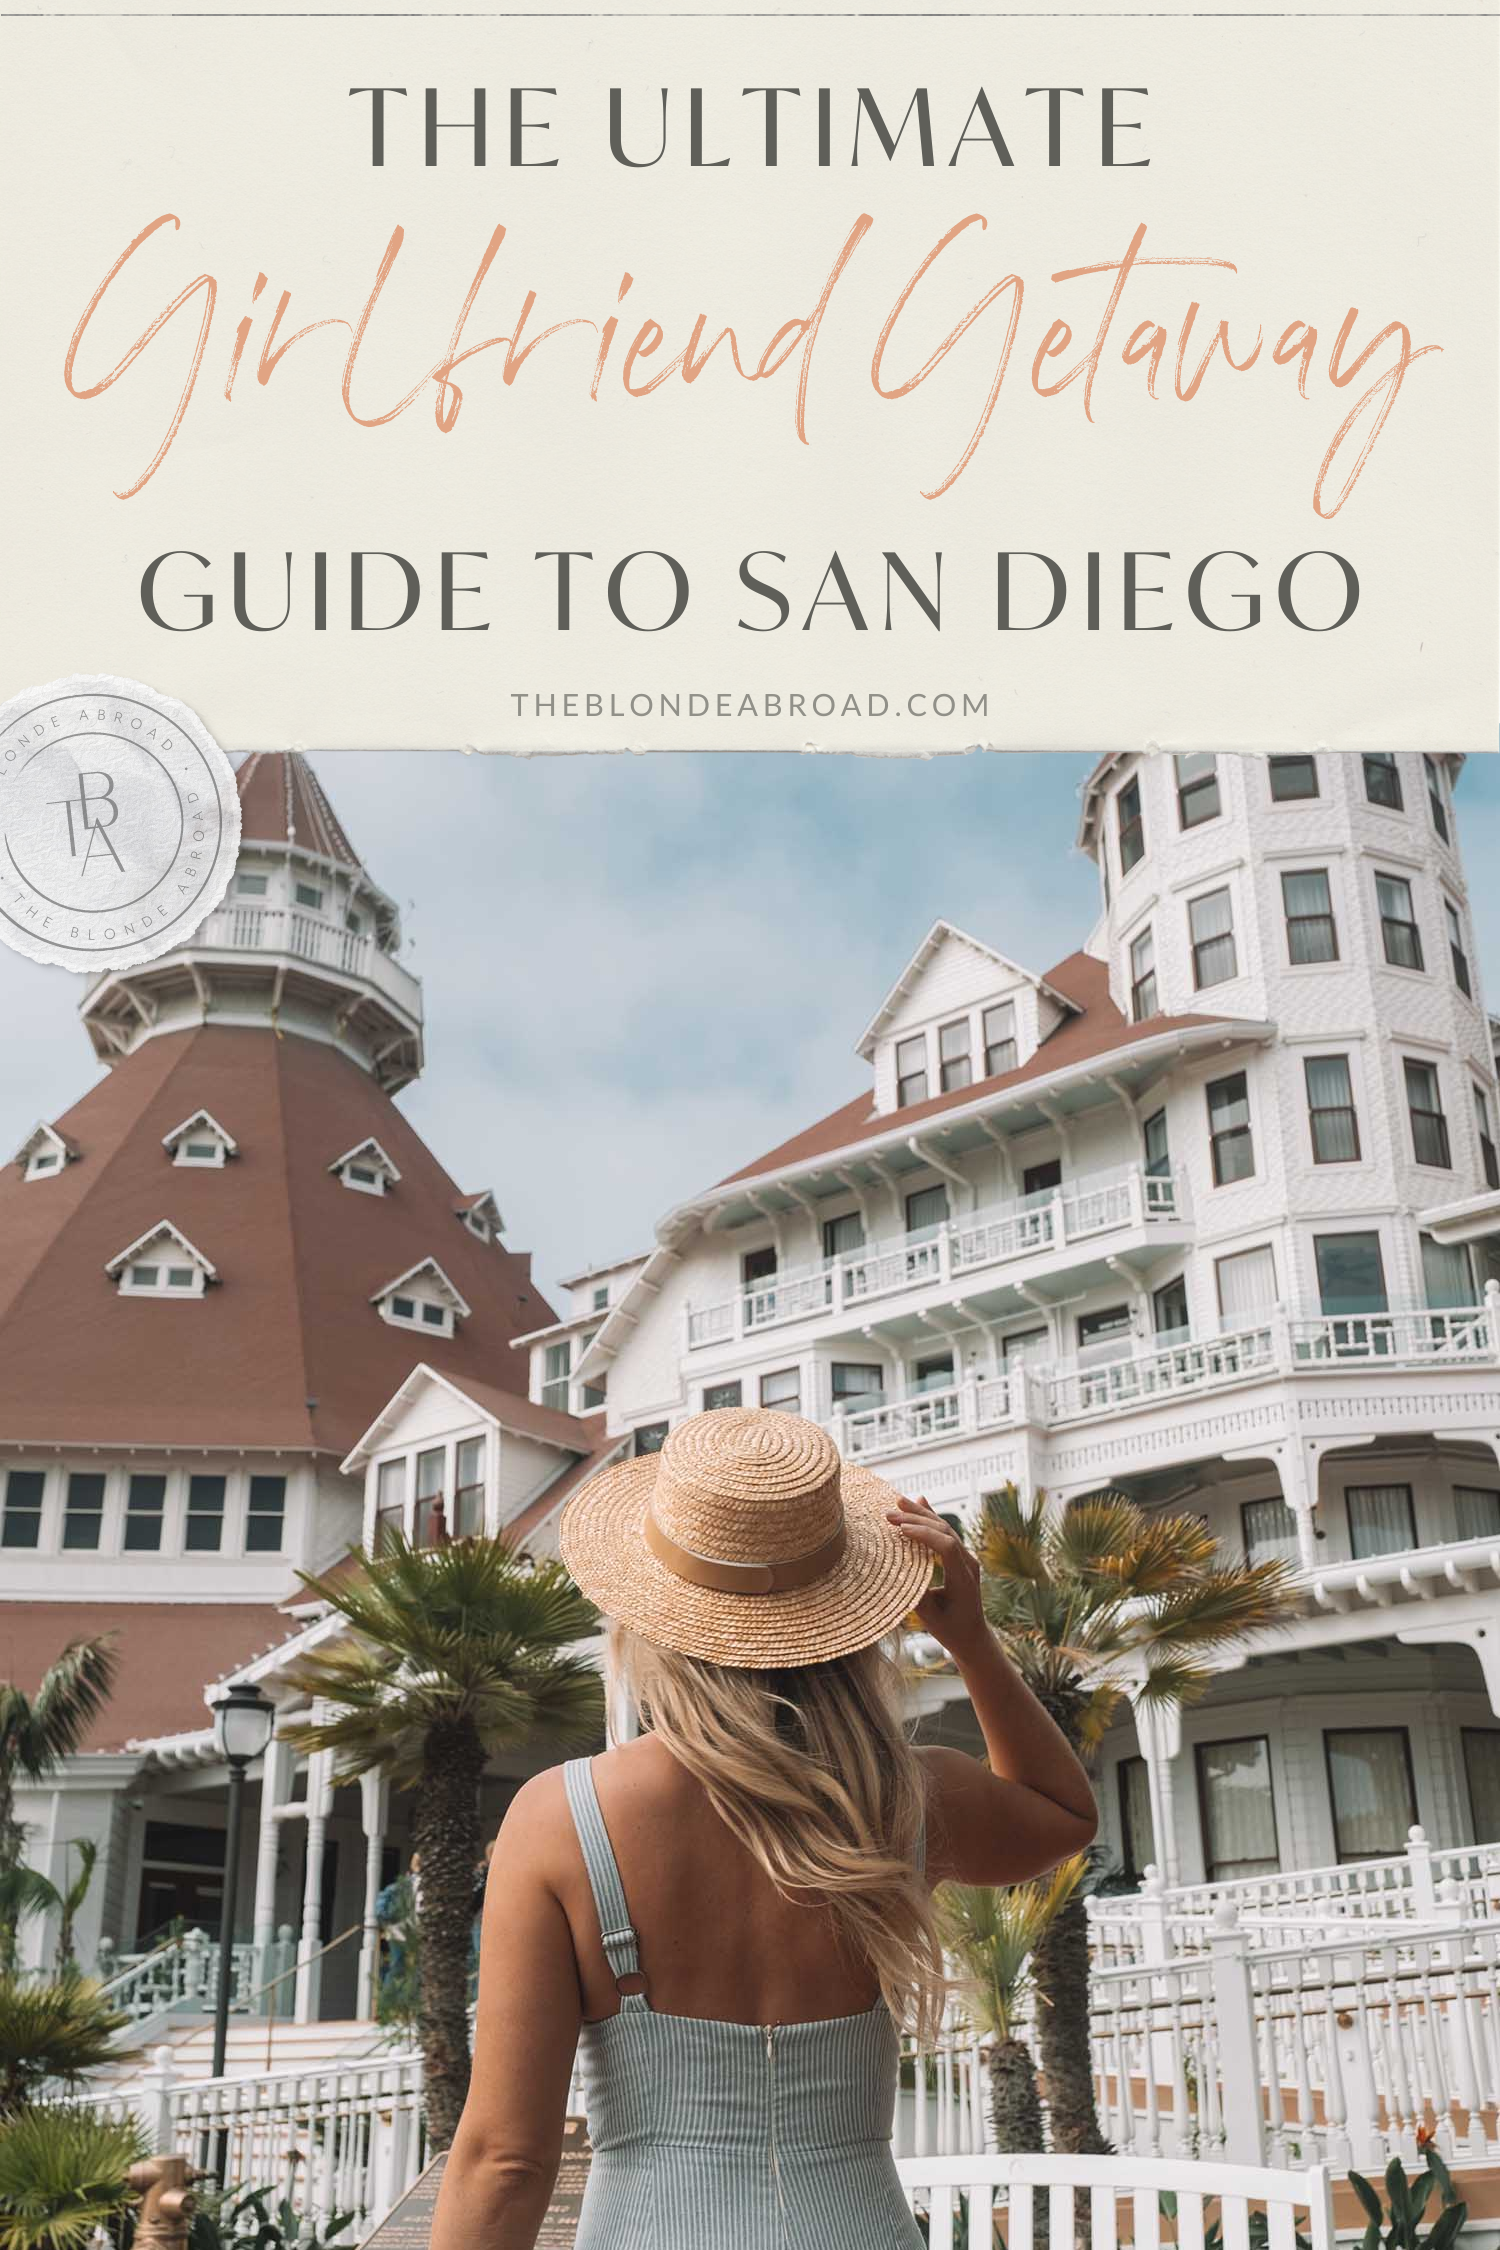 The Ultimate Girlfriend Getaway Guide to San Diego 